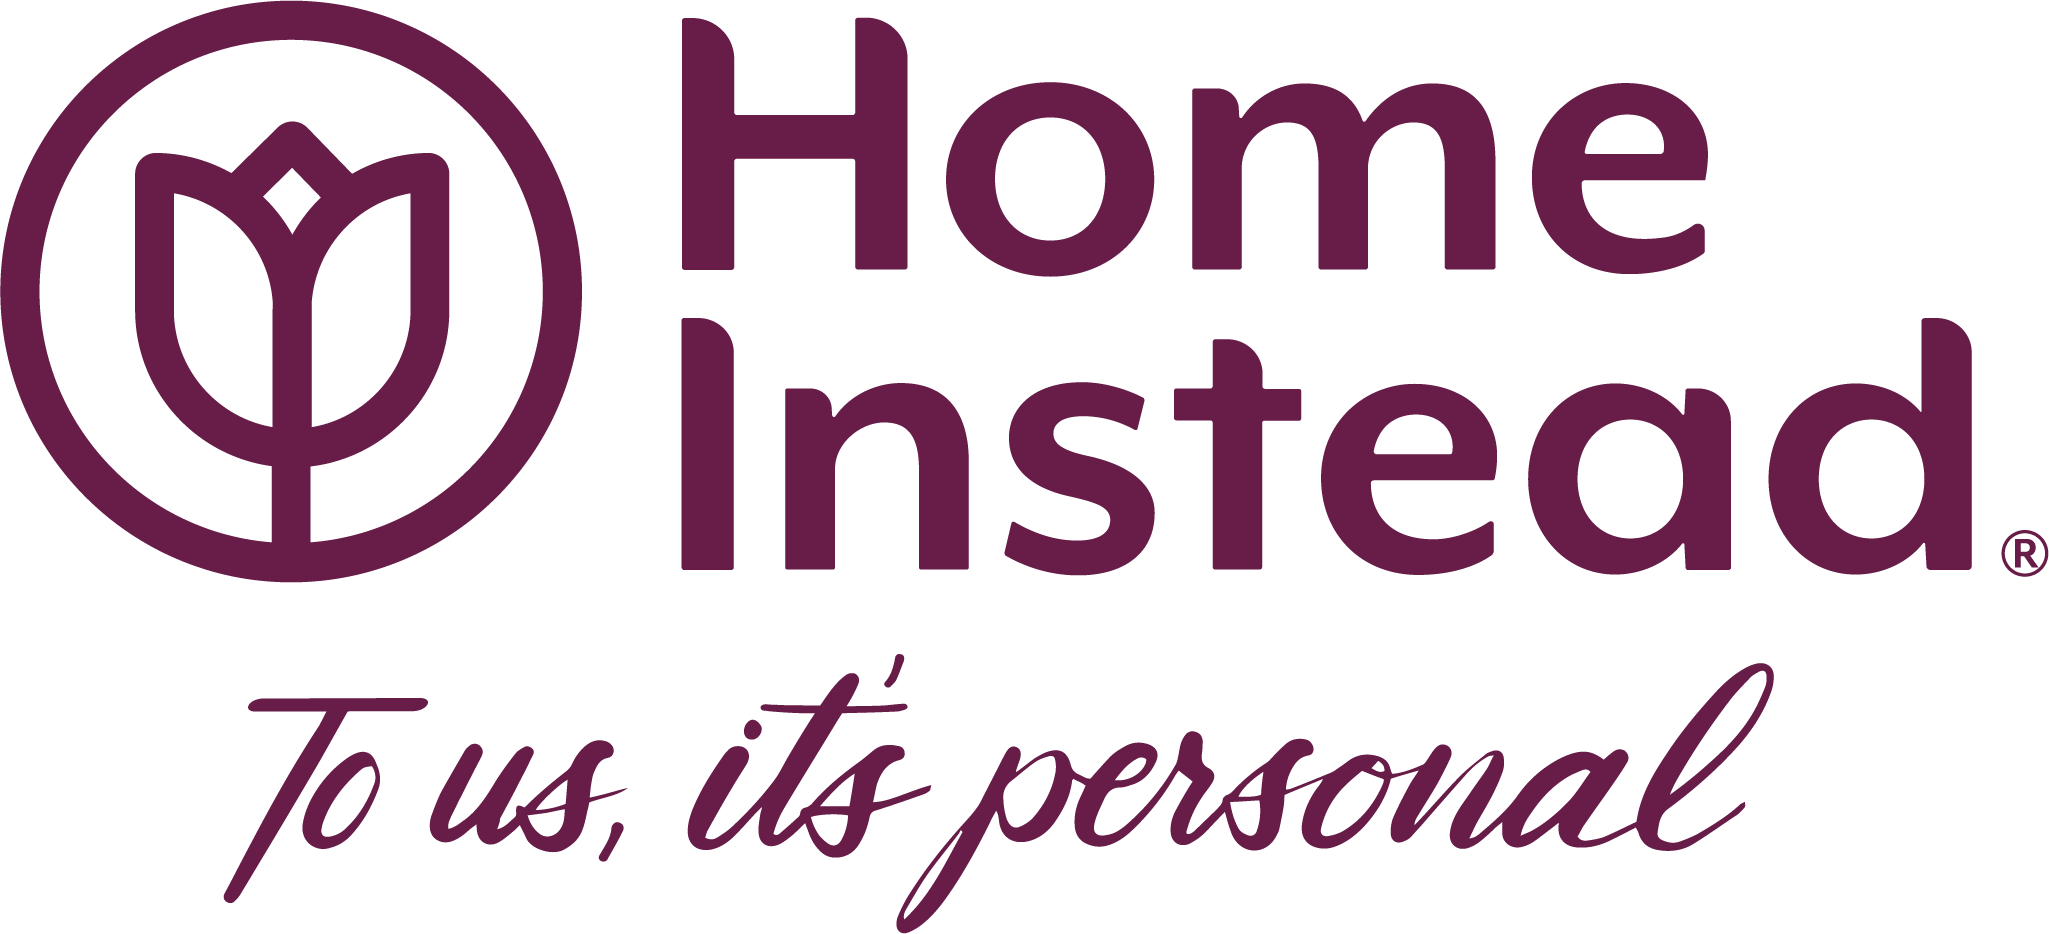 Home Instead Northshore Company Logo